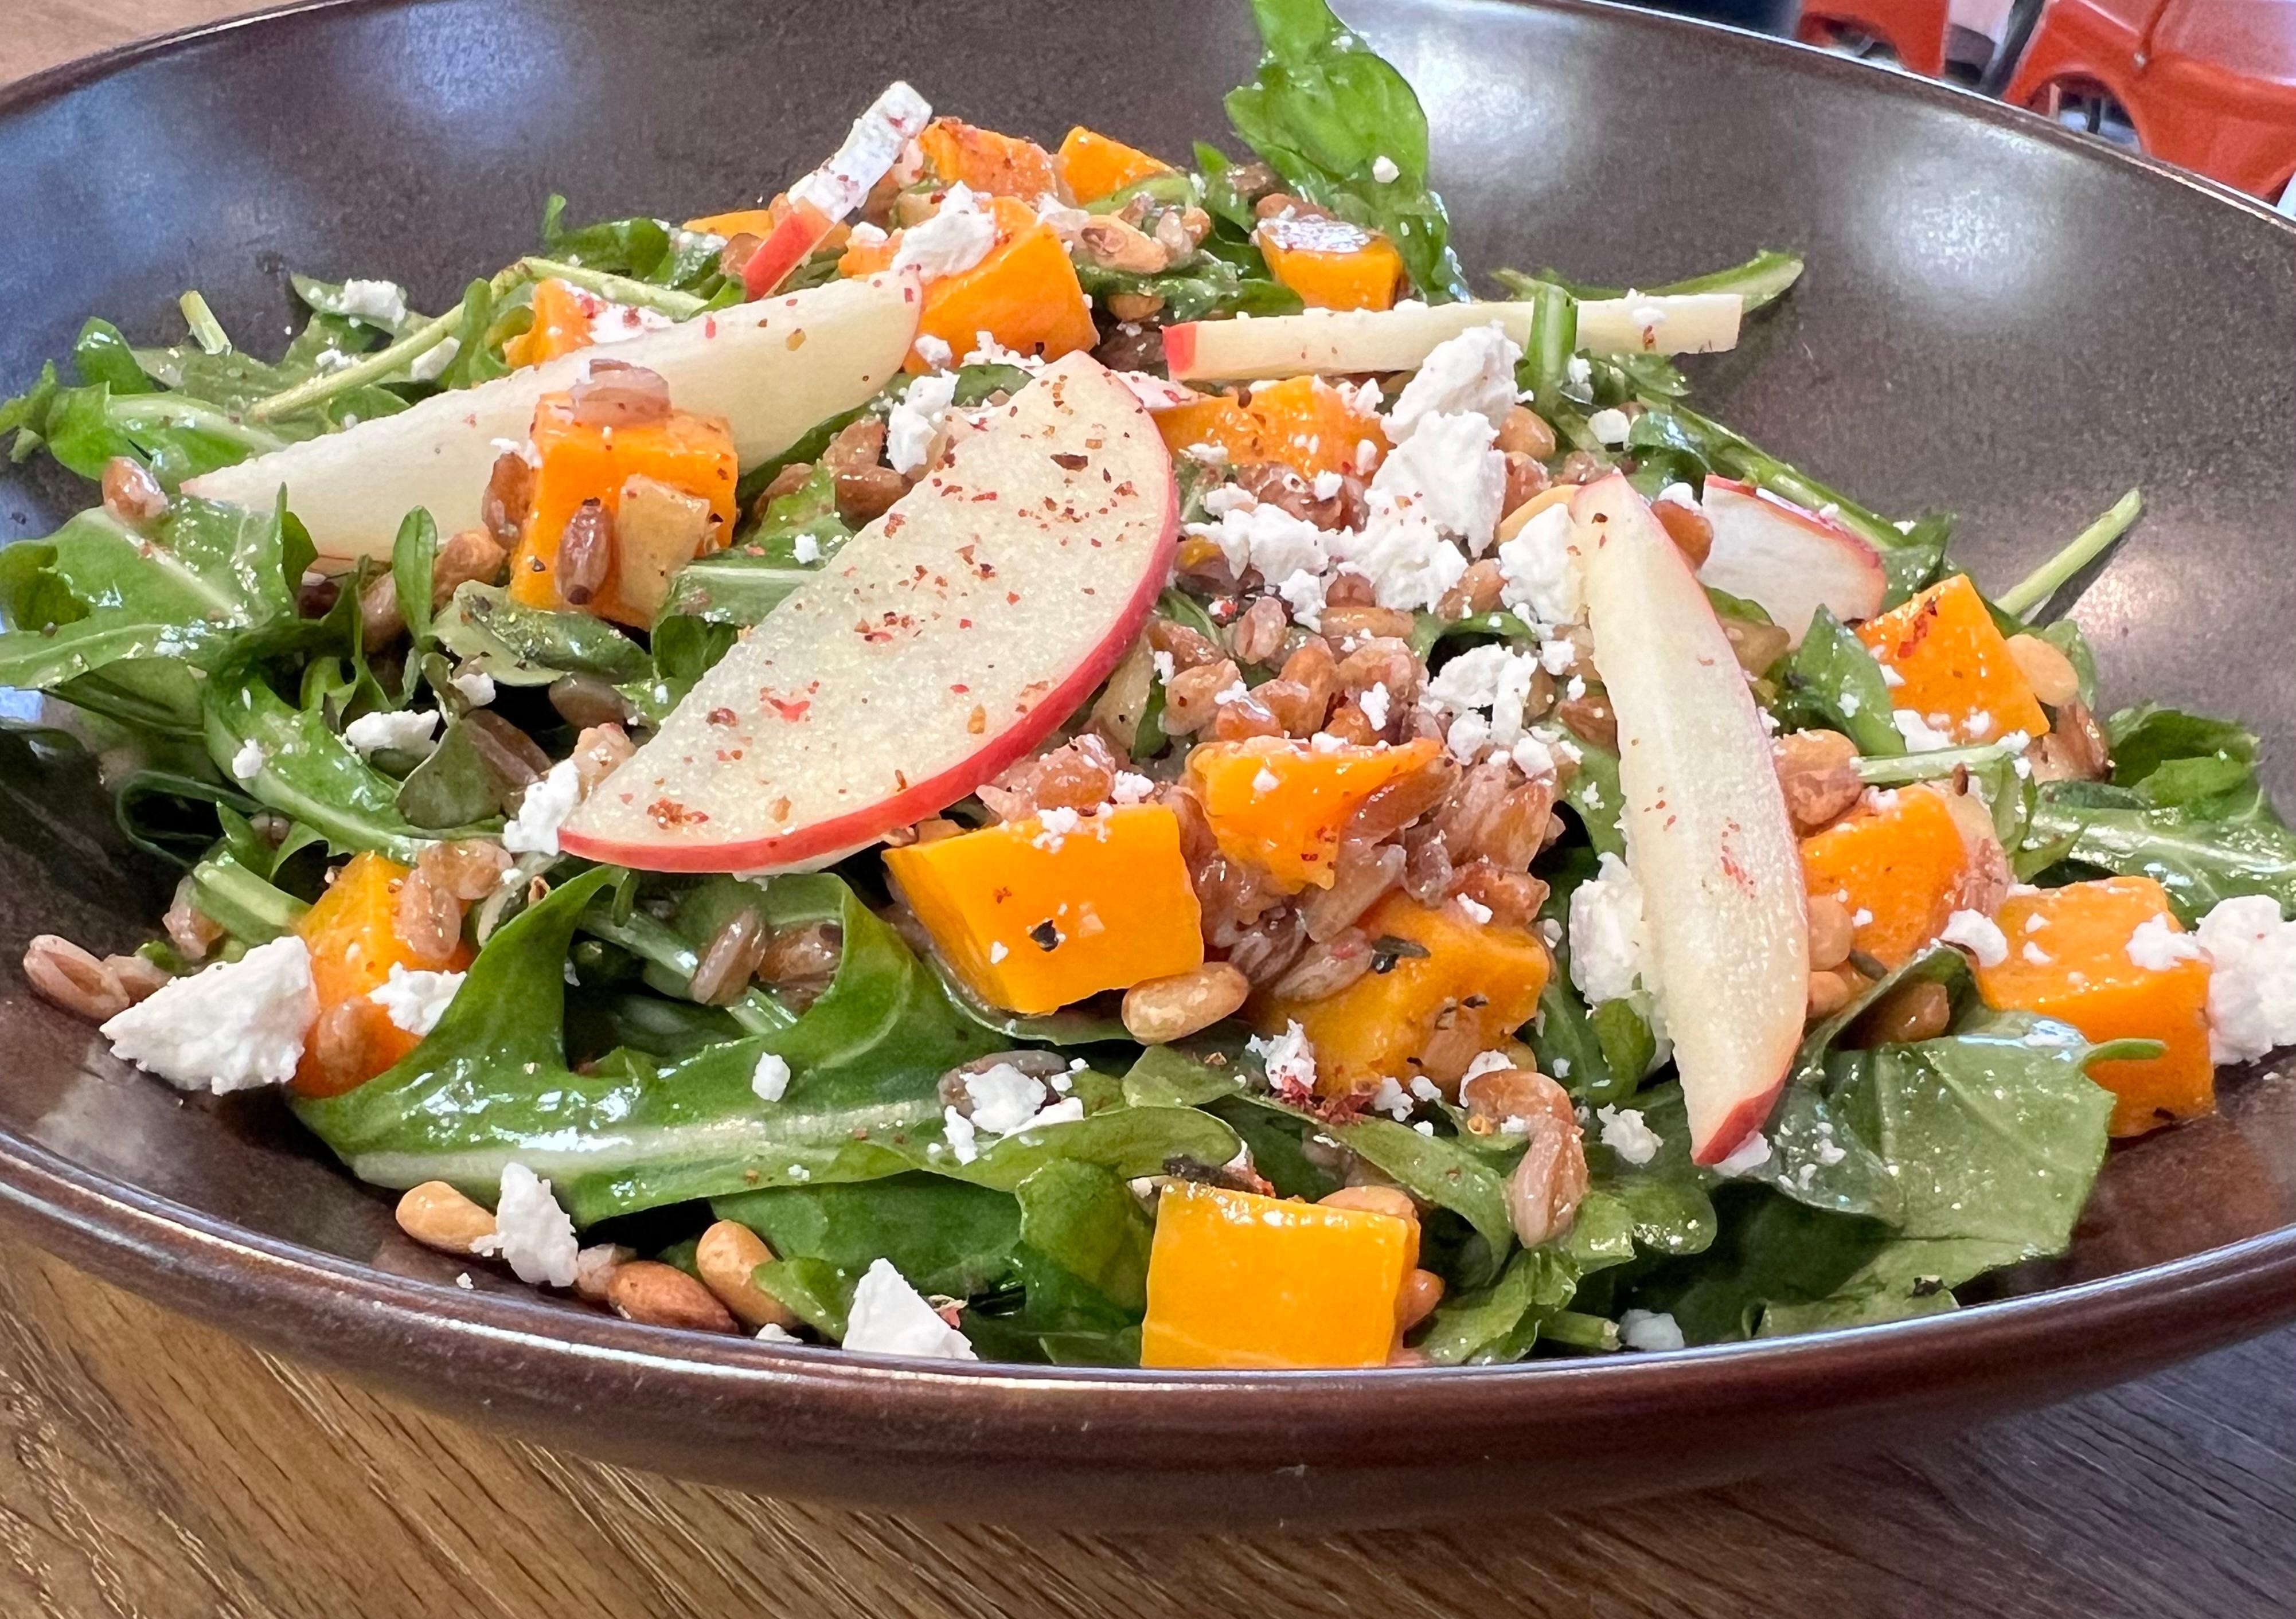 The Farro Salad